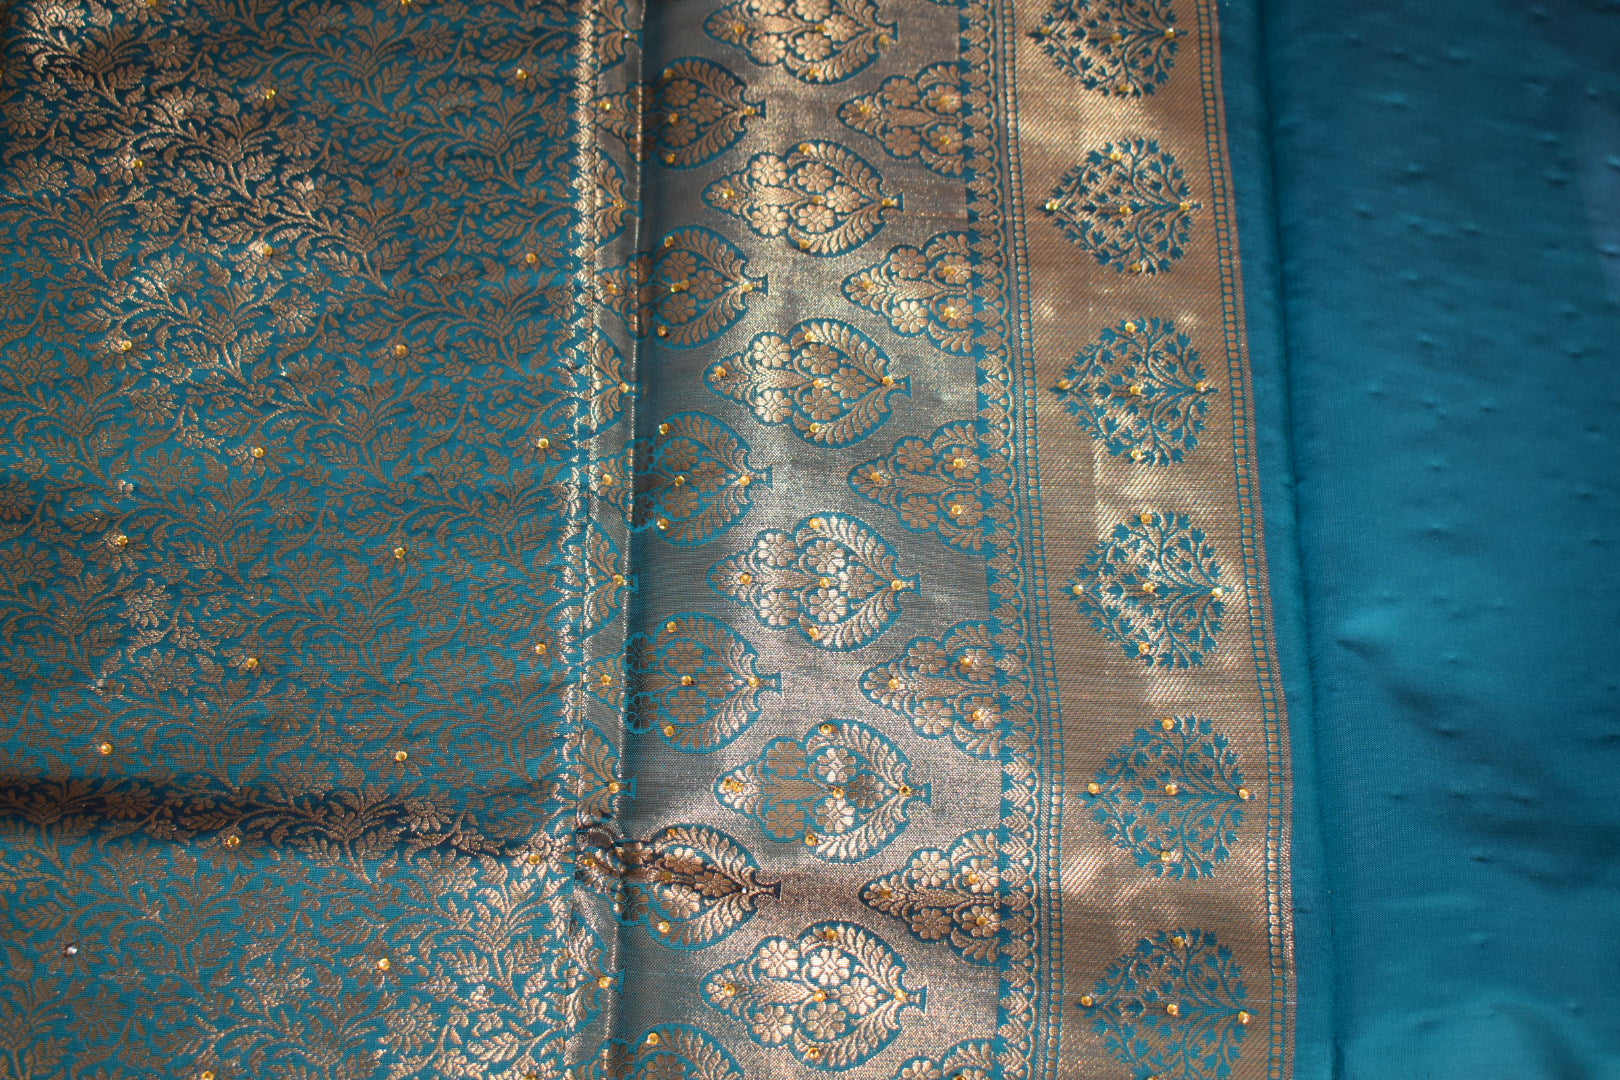 Greenish Blue Color - Silk Saree, Full Gold Zari Floral Design with Minakari stick-on